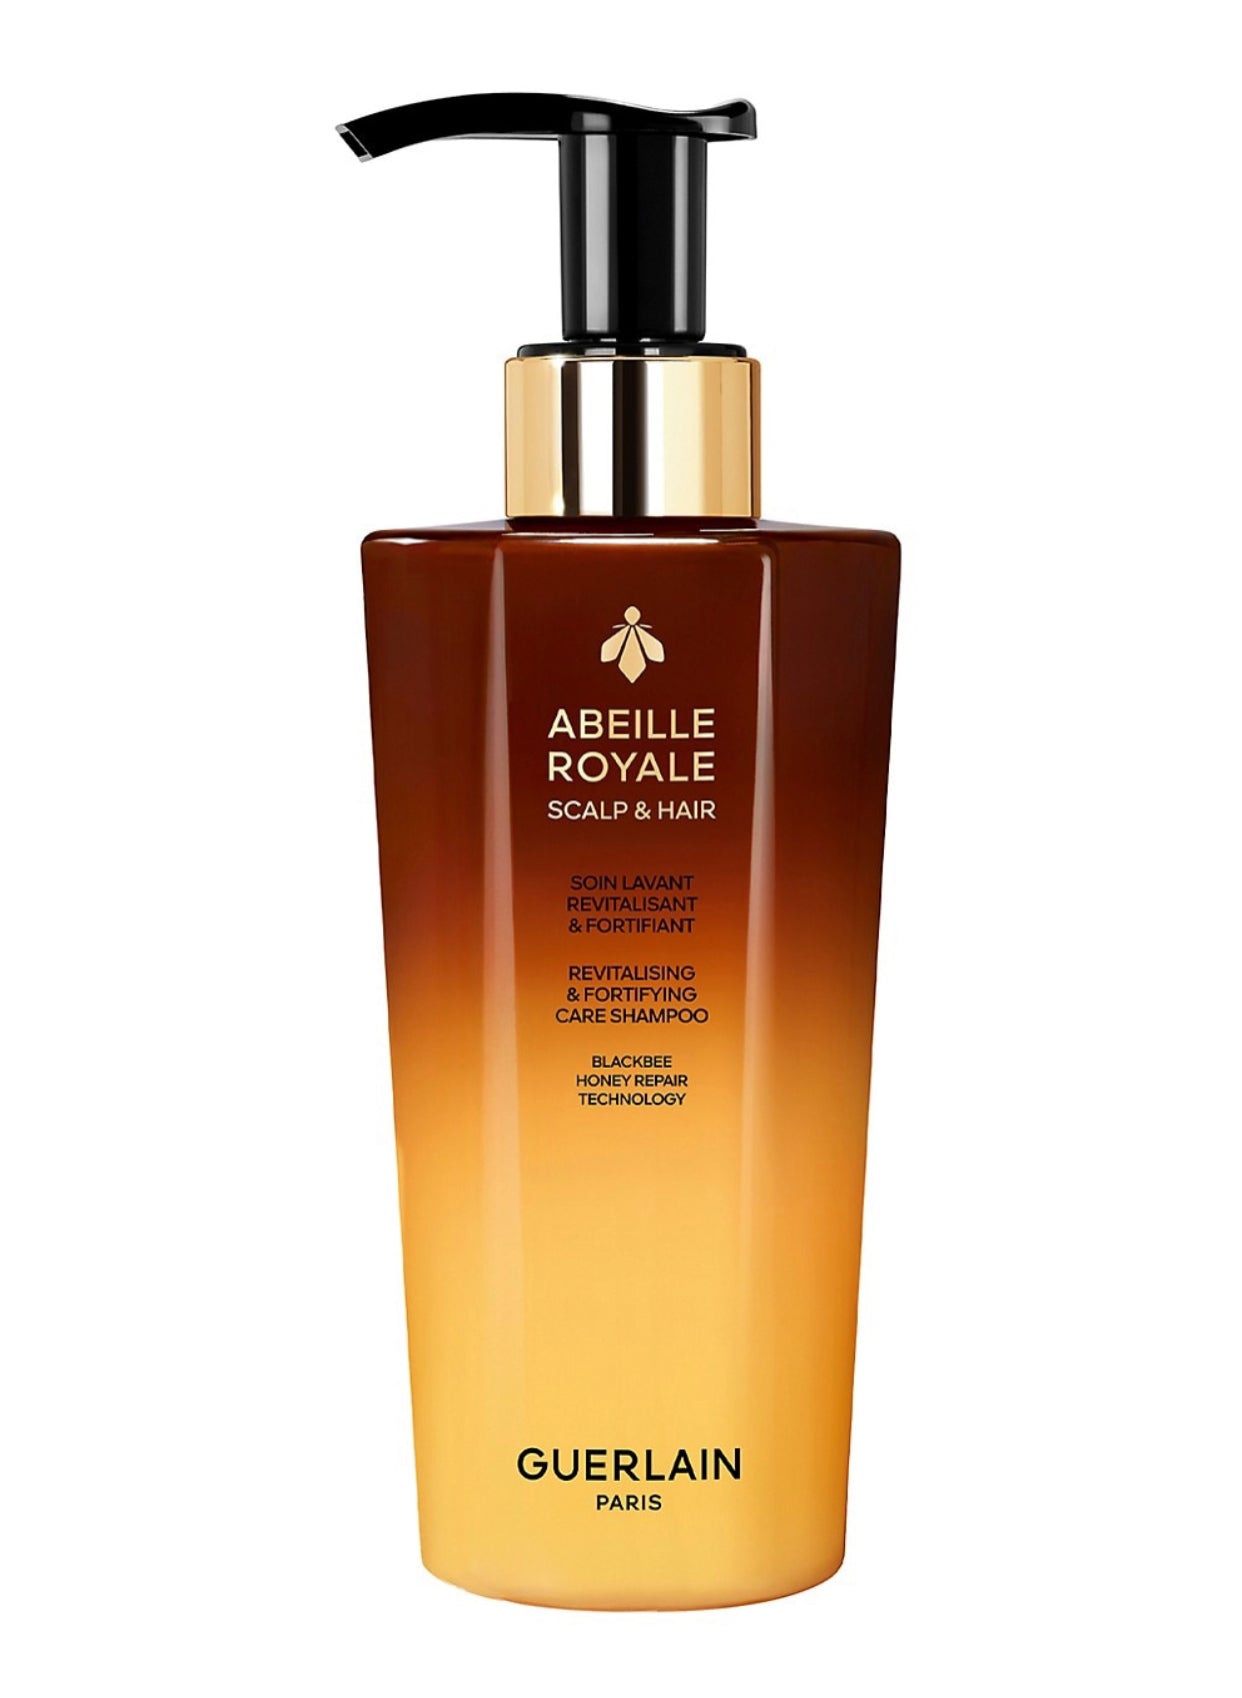 Guerlain, Abeille Royale Revitalizing & Fortifying Care Shampoo